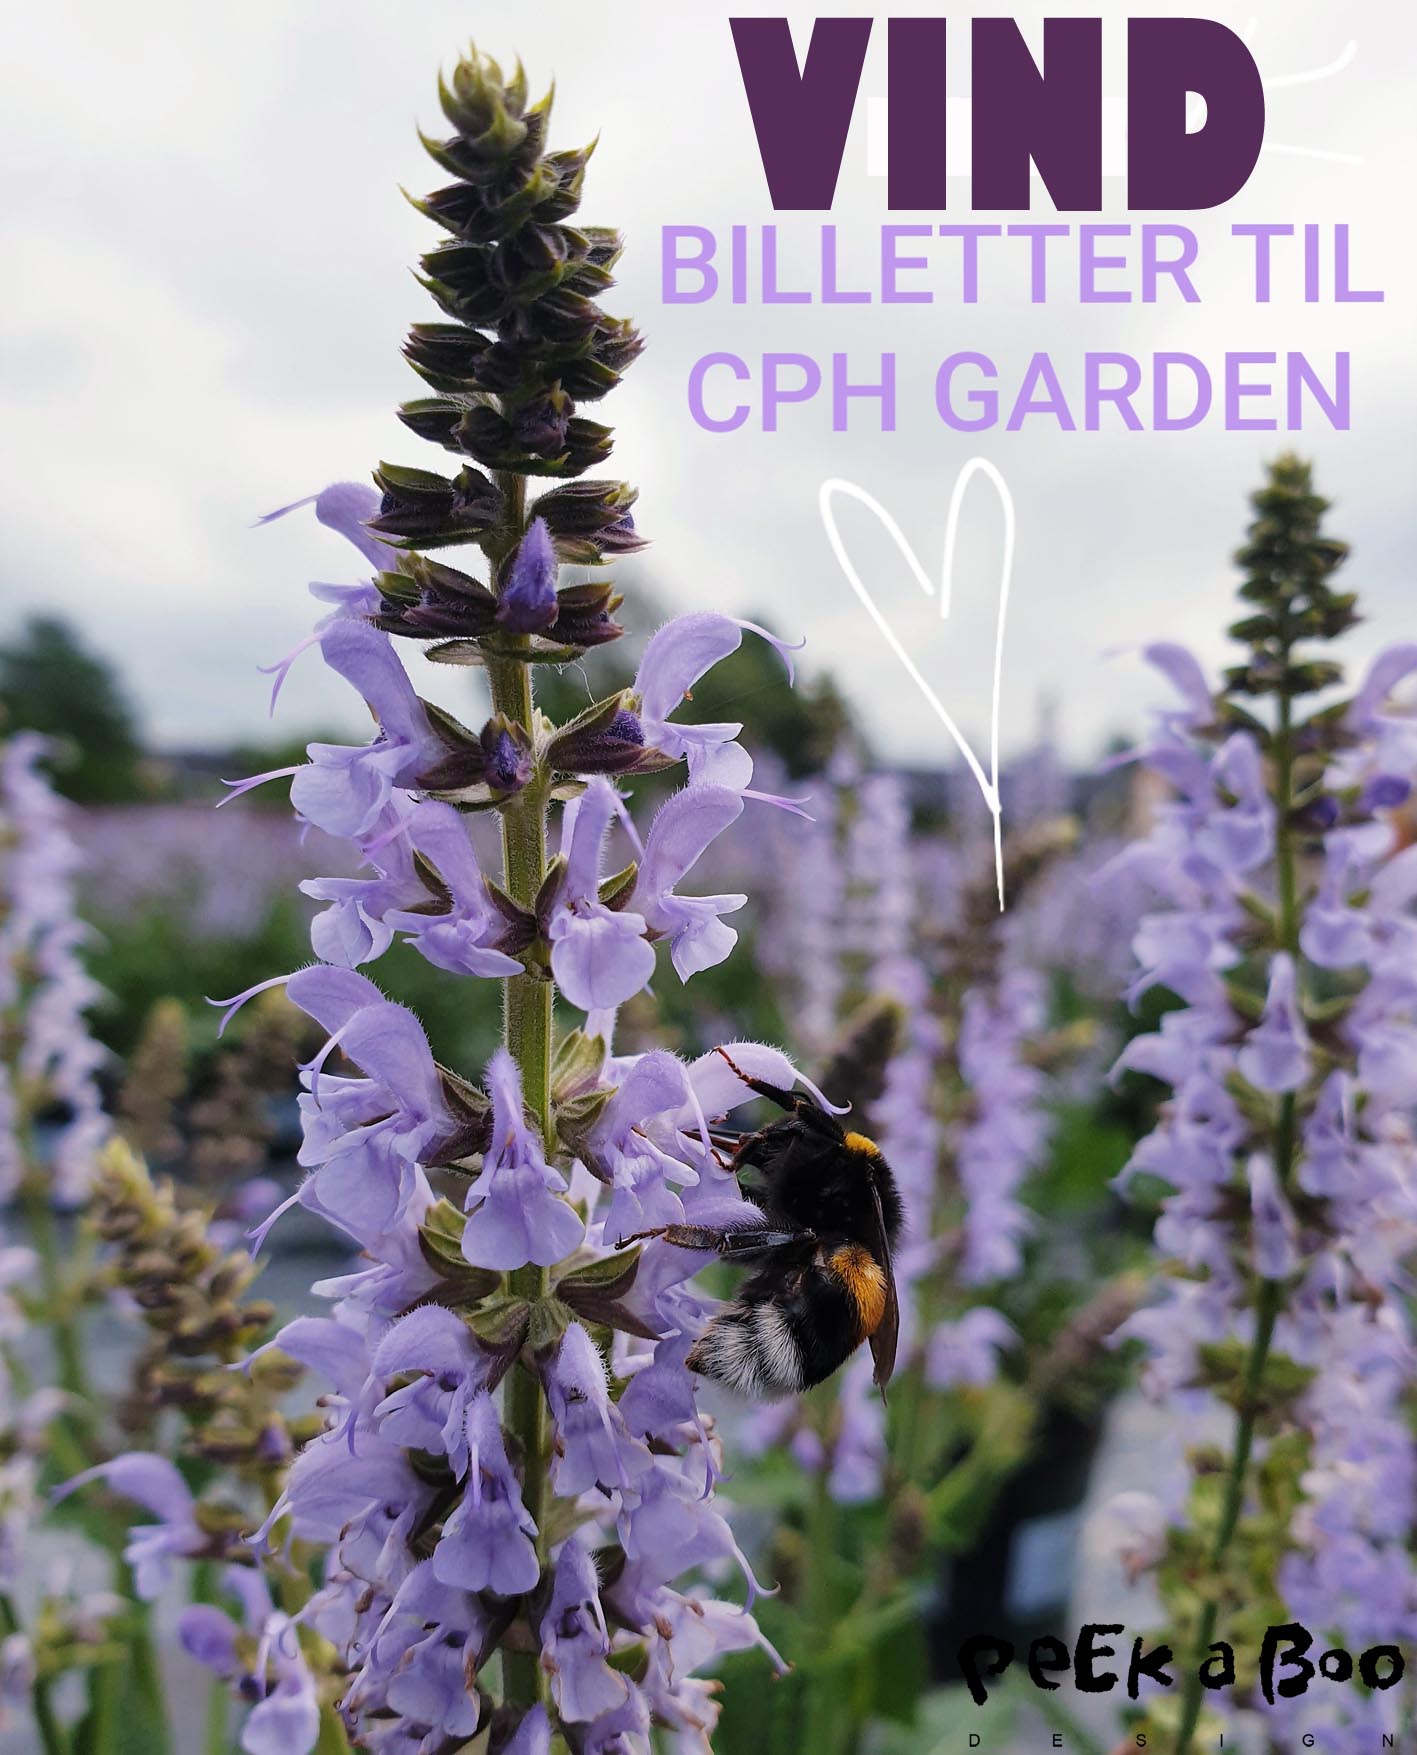 Win tickets to the garden show in Copenhagen next week. CPH Garden 2019.